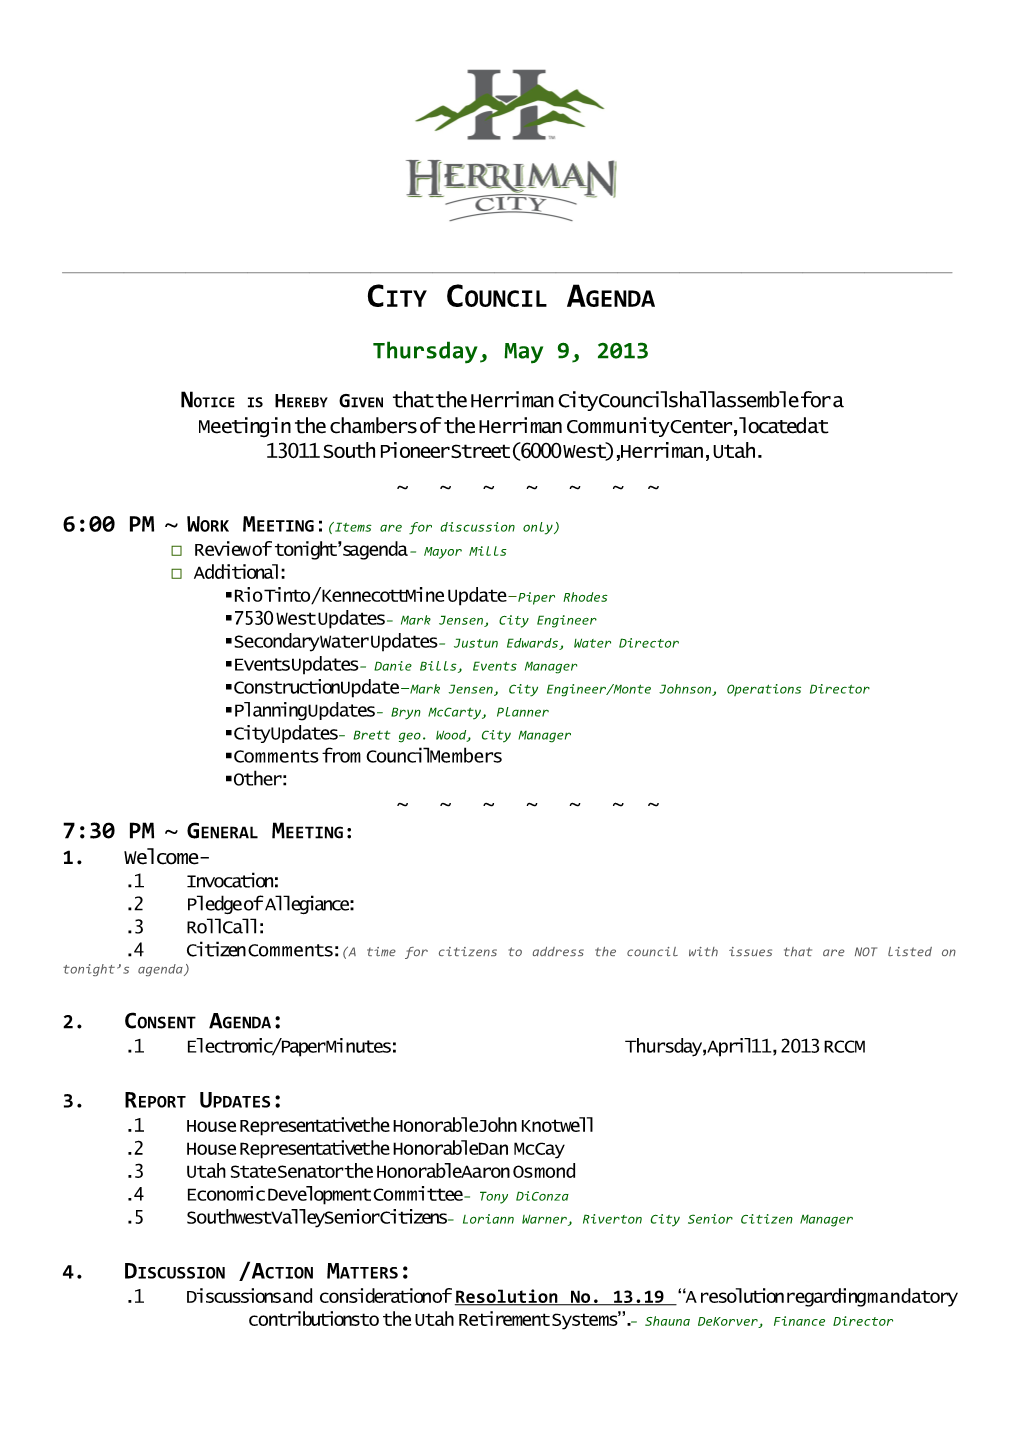 City Council Agenda s5